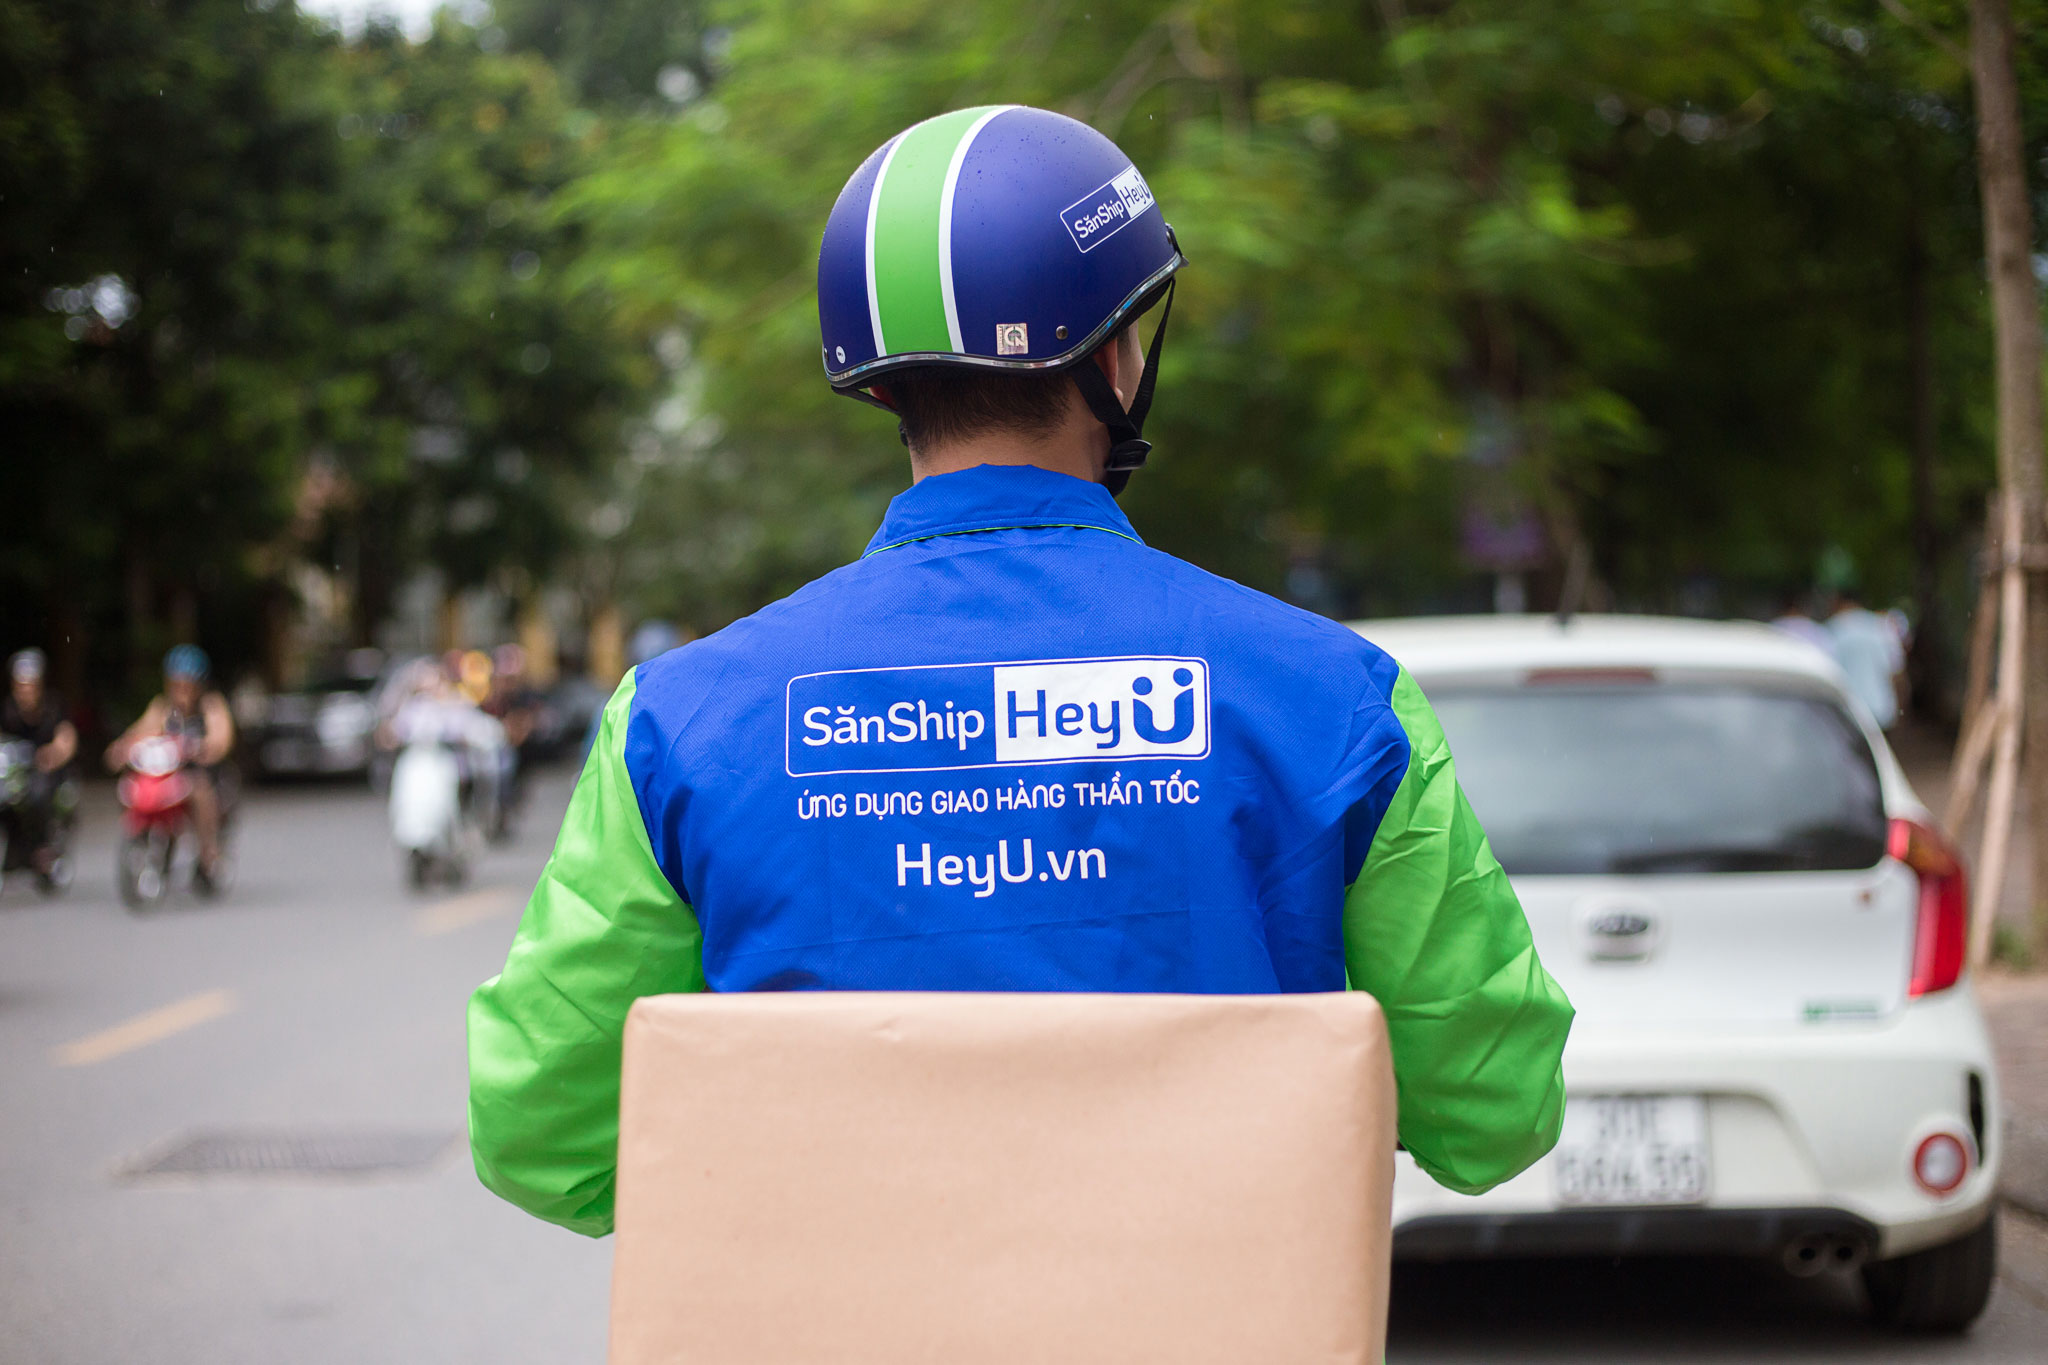 Vietnamese startup HeyU wants to mimic Gojek’s concierge model